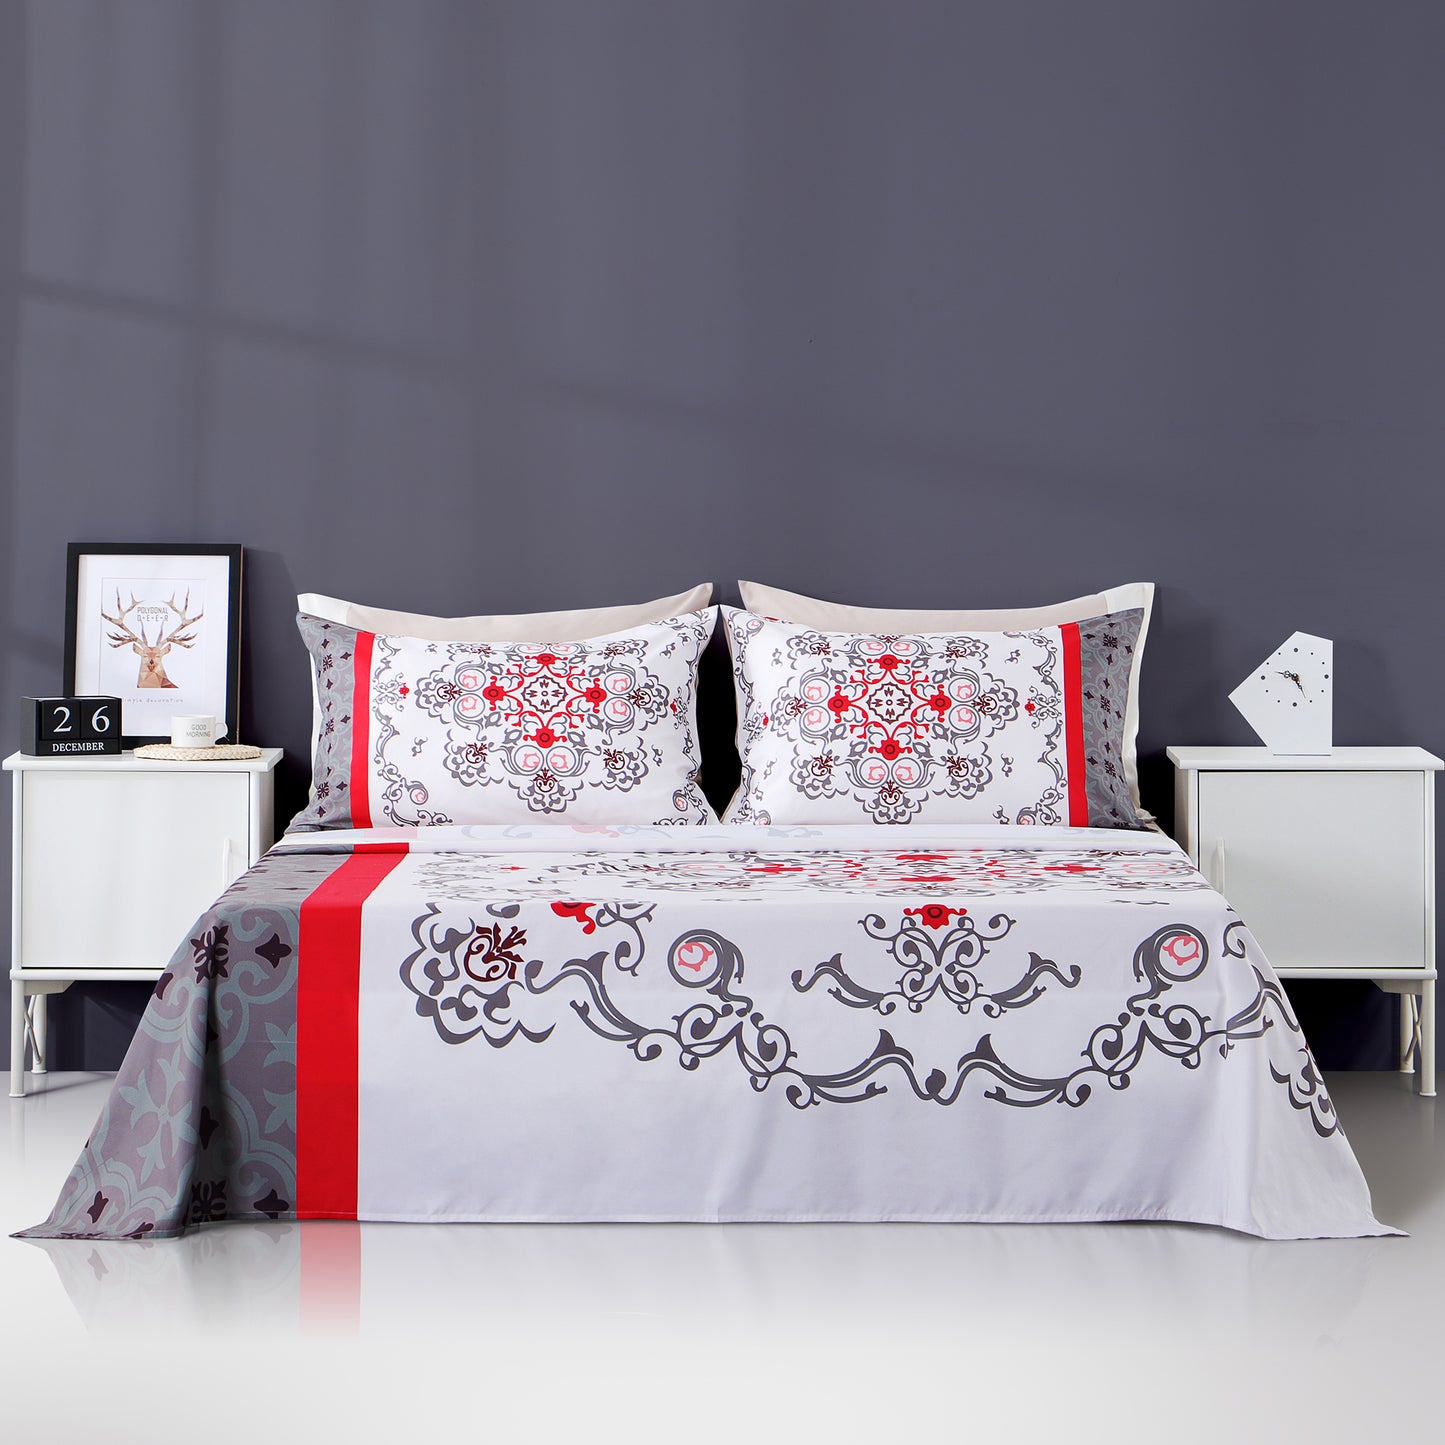 6 Piece Bed Sheet set-Snow White